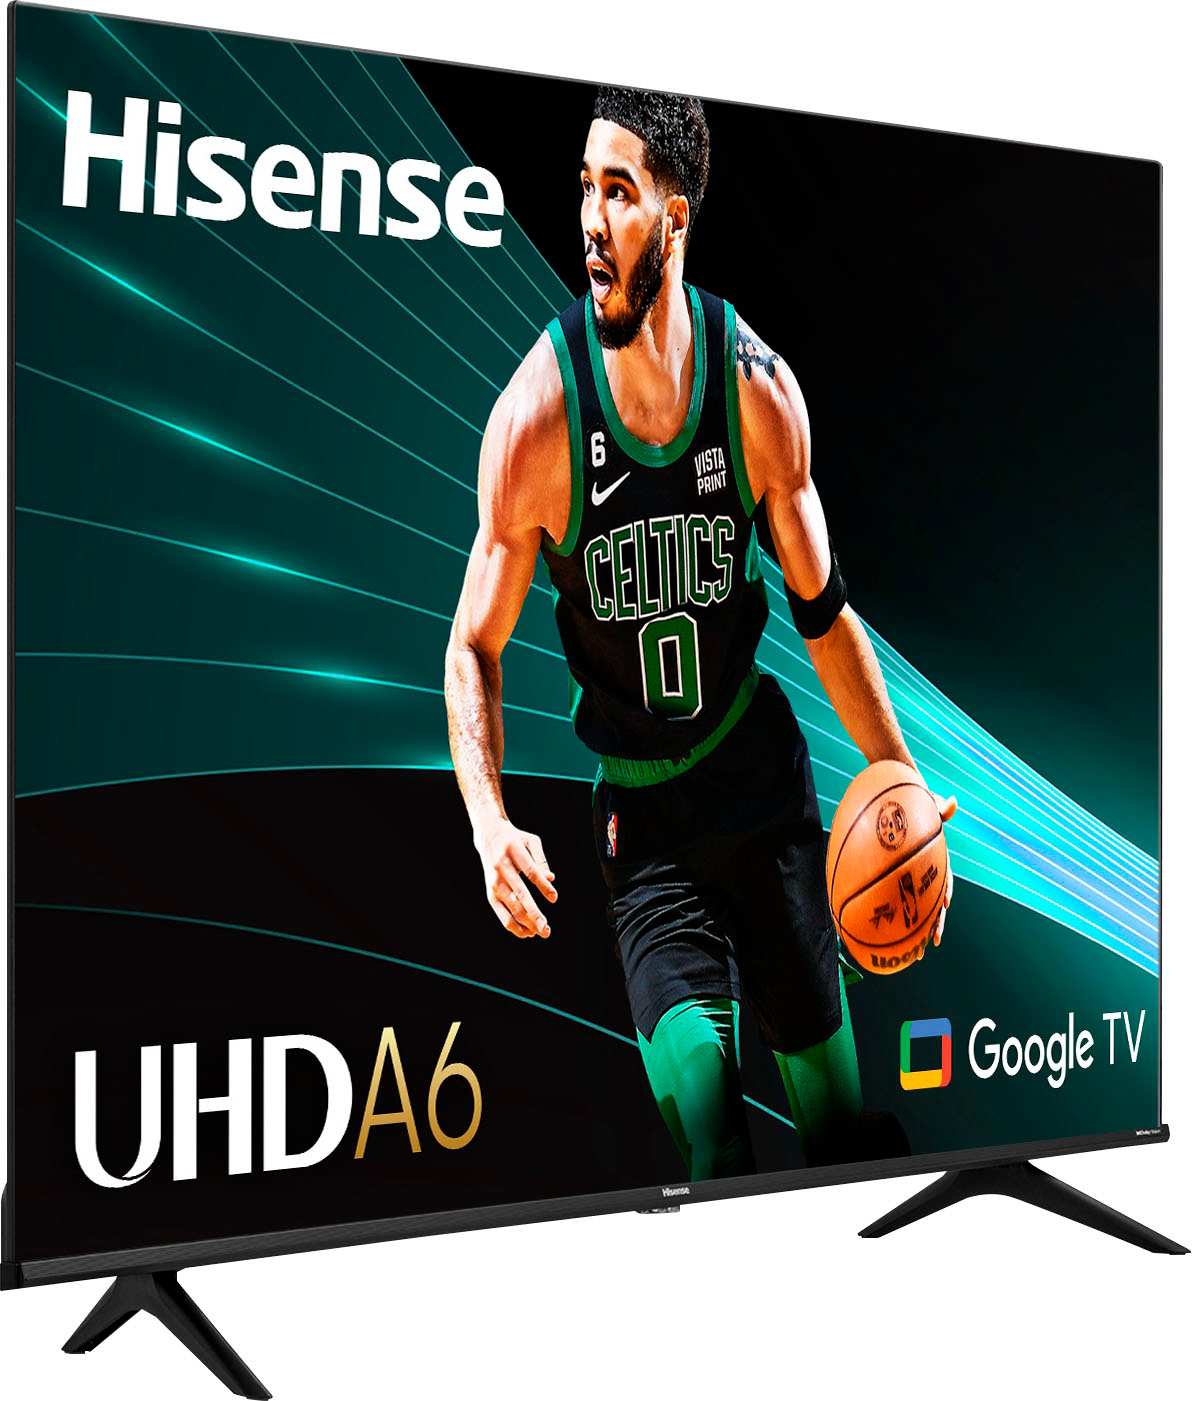 Hisense 50 Class R6G Series LED 4K UHD Smart Roku TV 50R6G - Best Buy